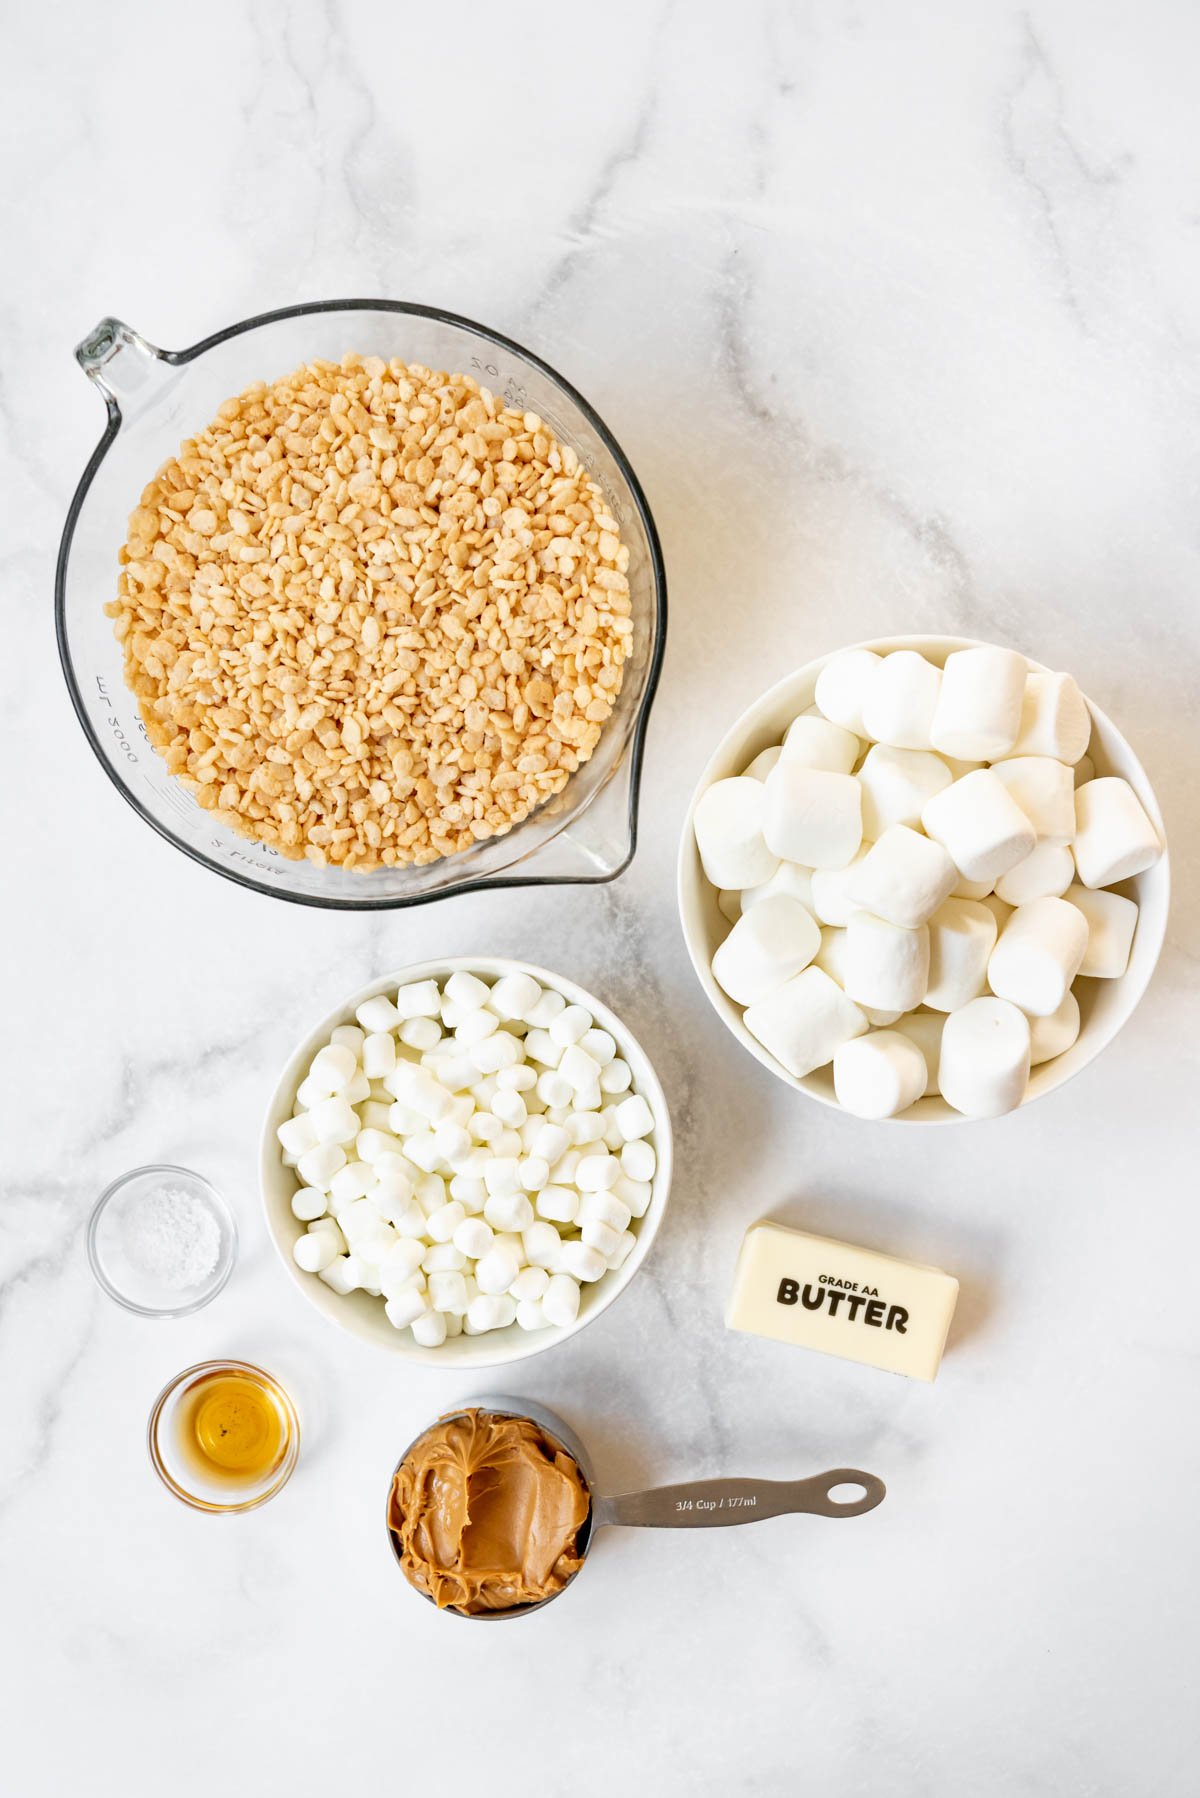 Top view of ingredients needed for peanut butter rice krispie treats.